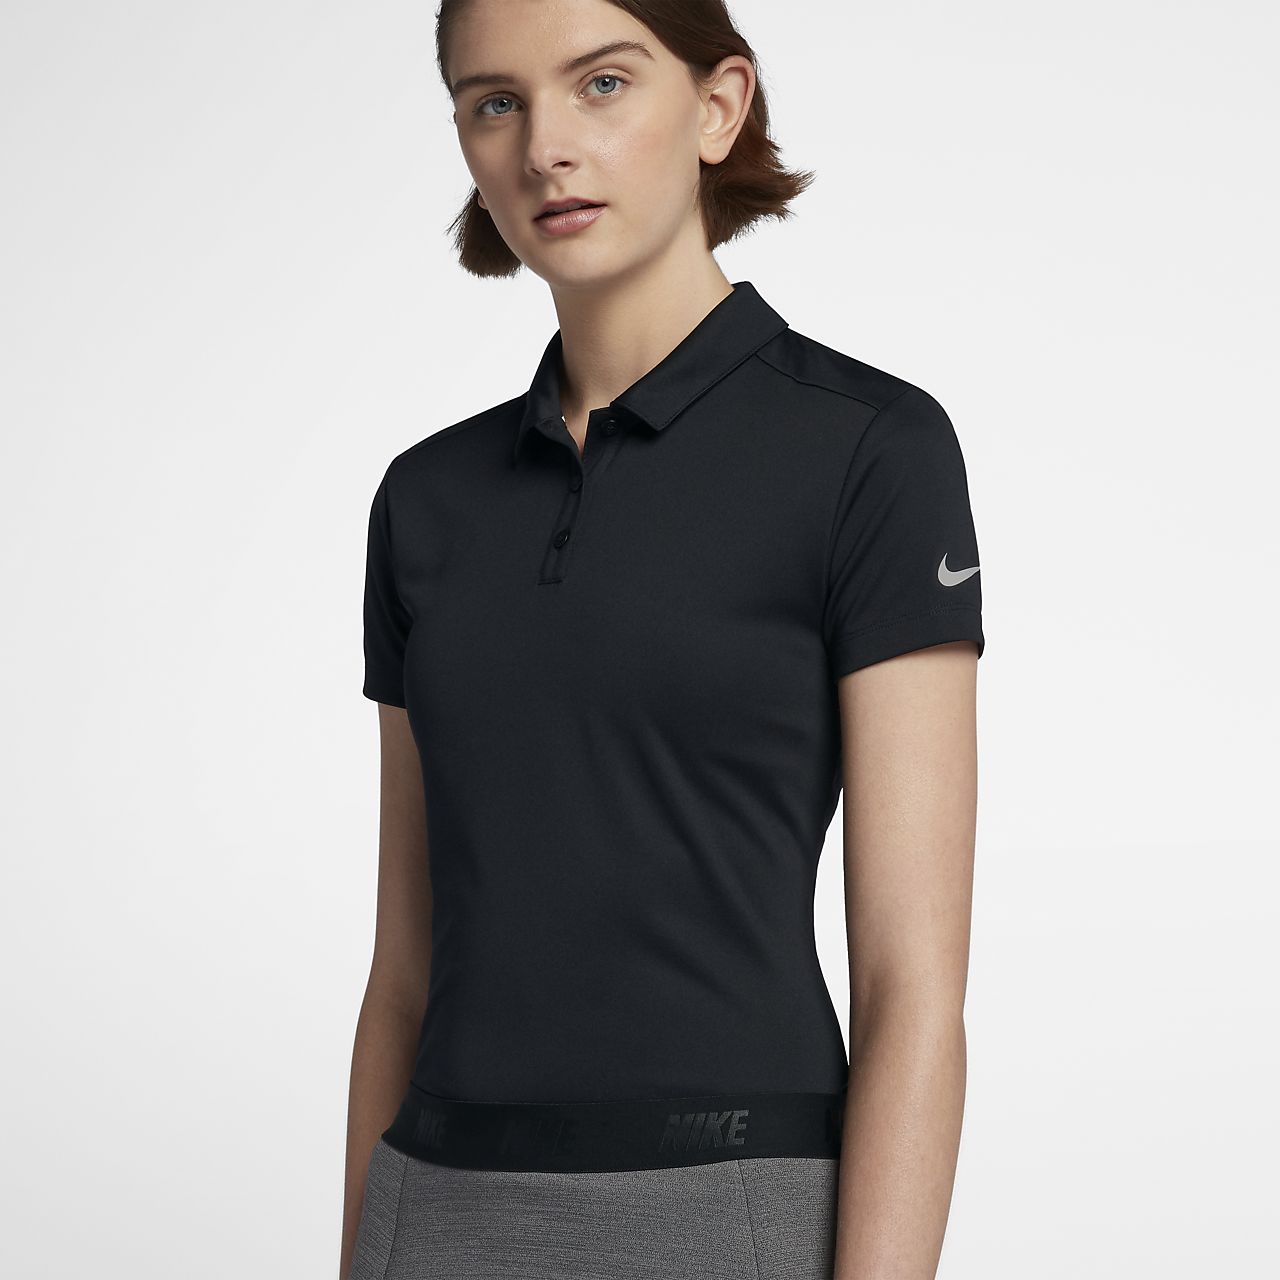 Buy > womens golf polo nike > in stock